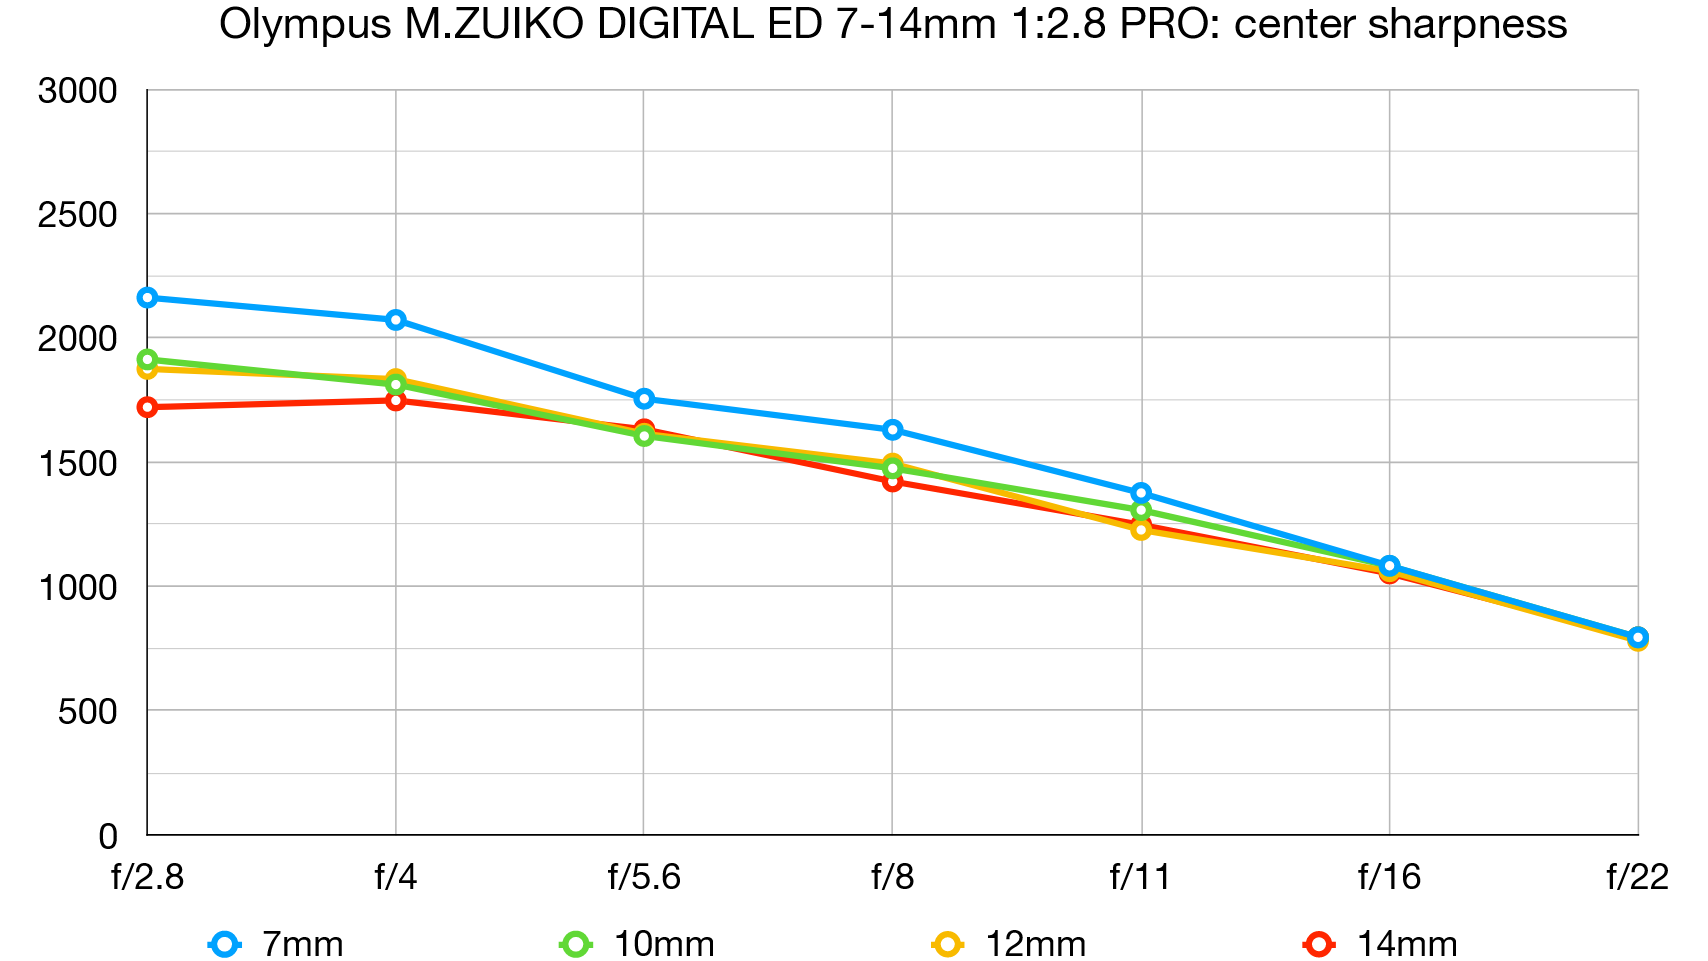 Olympus M.ZUIKO DIGITAL ED 7-14mm 1:2.8 PRO review | Digital Camera World